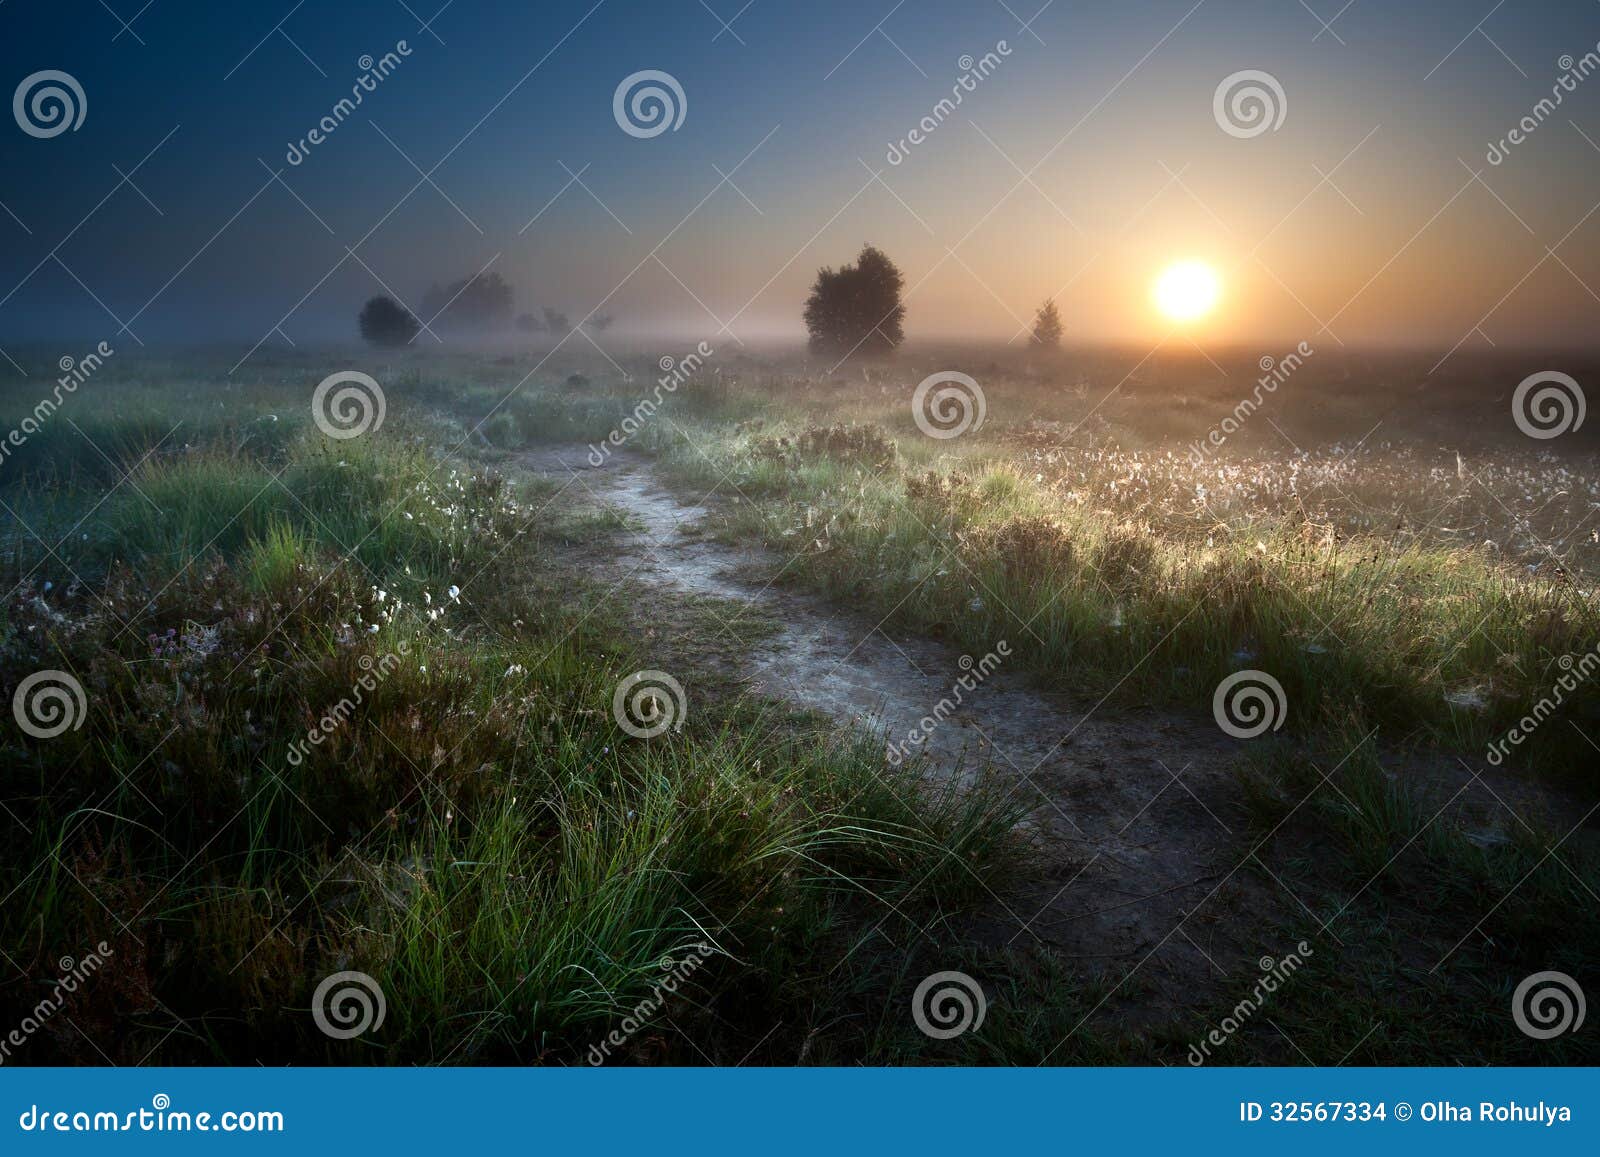 misty sunrise over countryside path